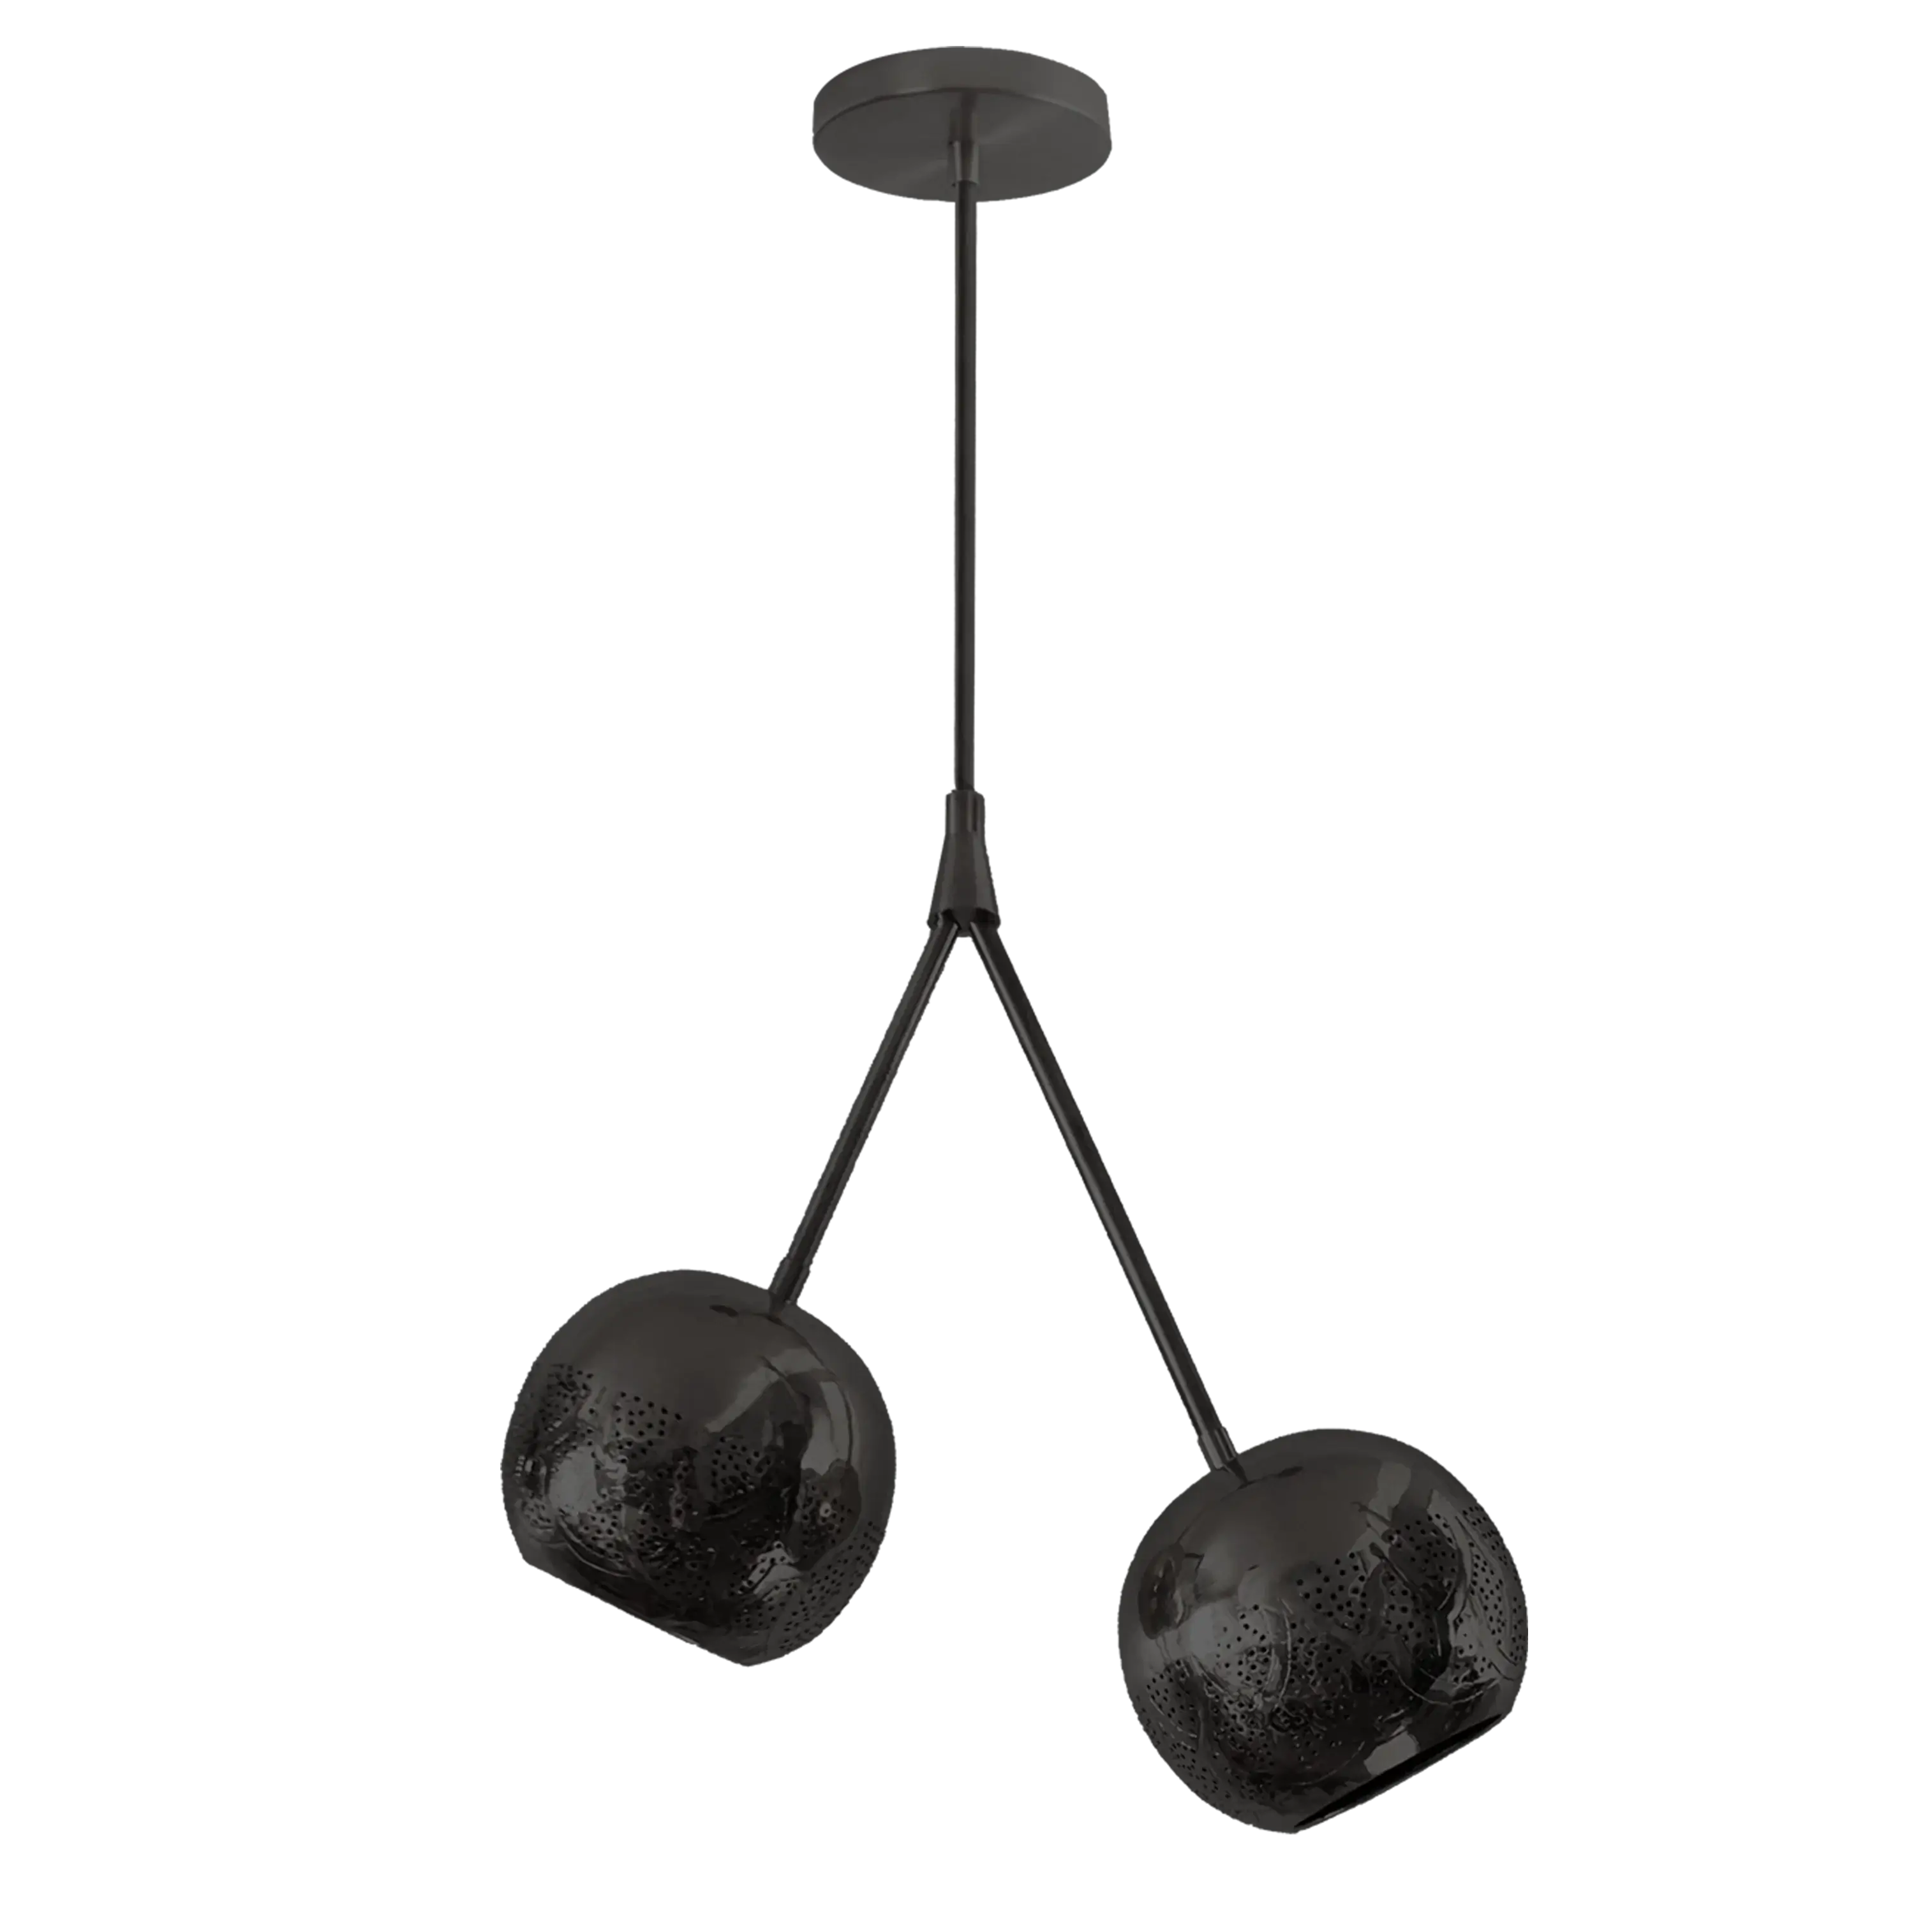 Dounia home Pendant light in black  made of Metal, Model: Nur mod twin